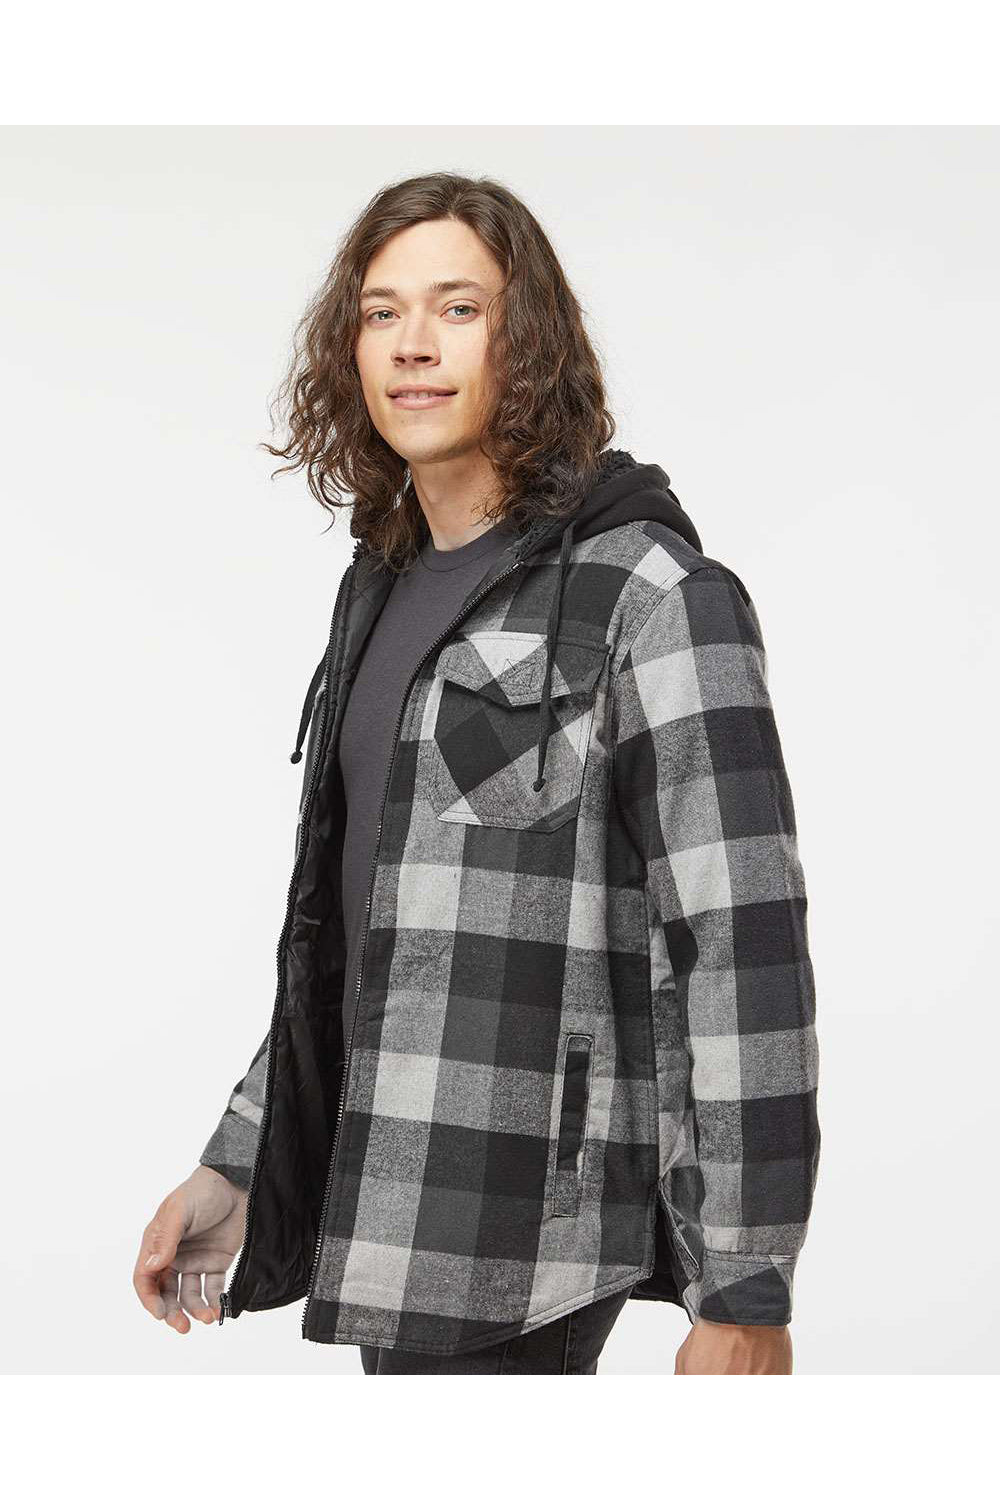 Burnside 8620 Mens Quilted Flannel Full Zip Hooded Jacket Black/Grey Model Side